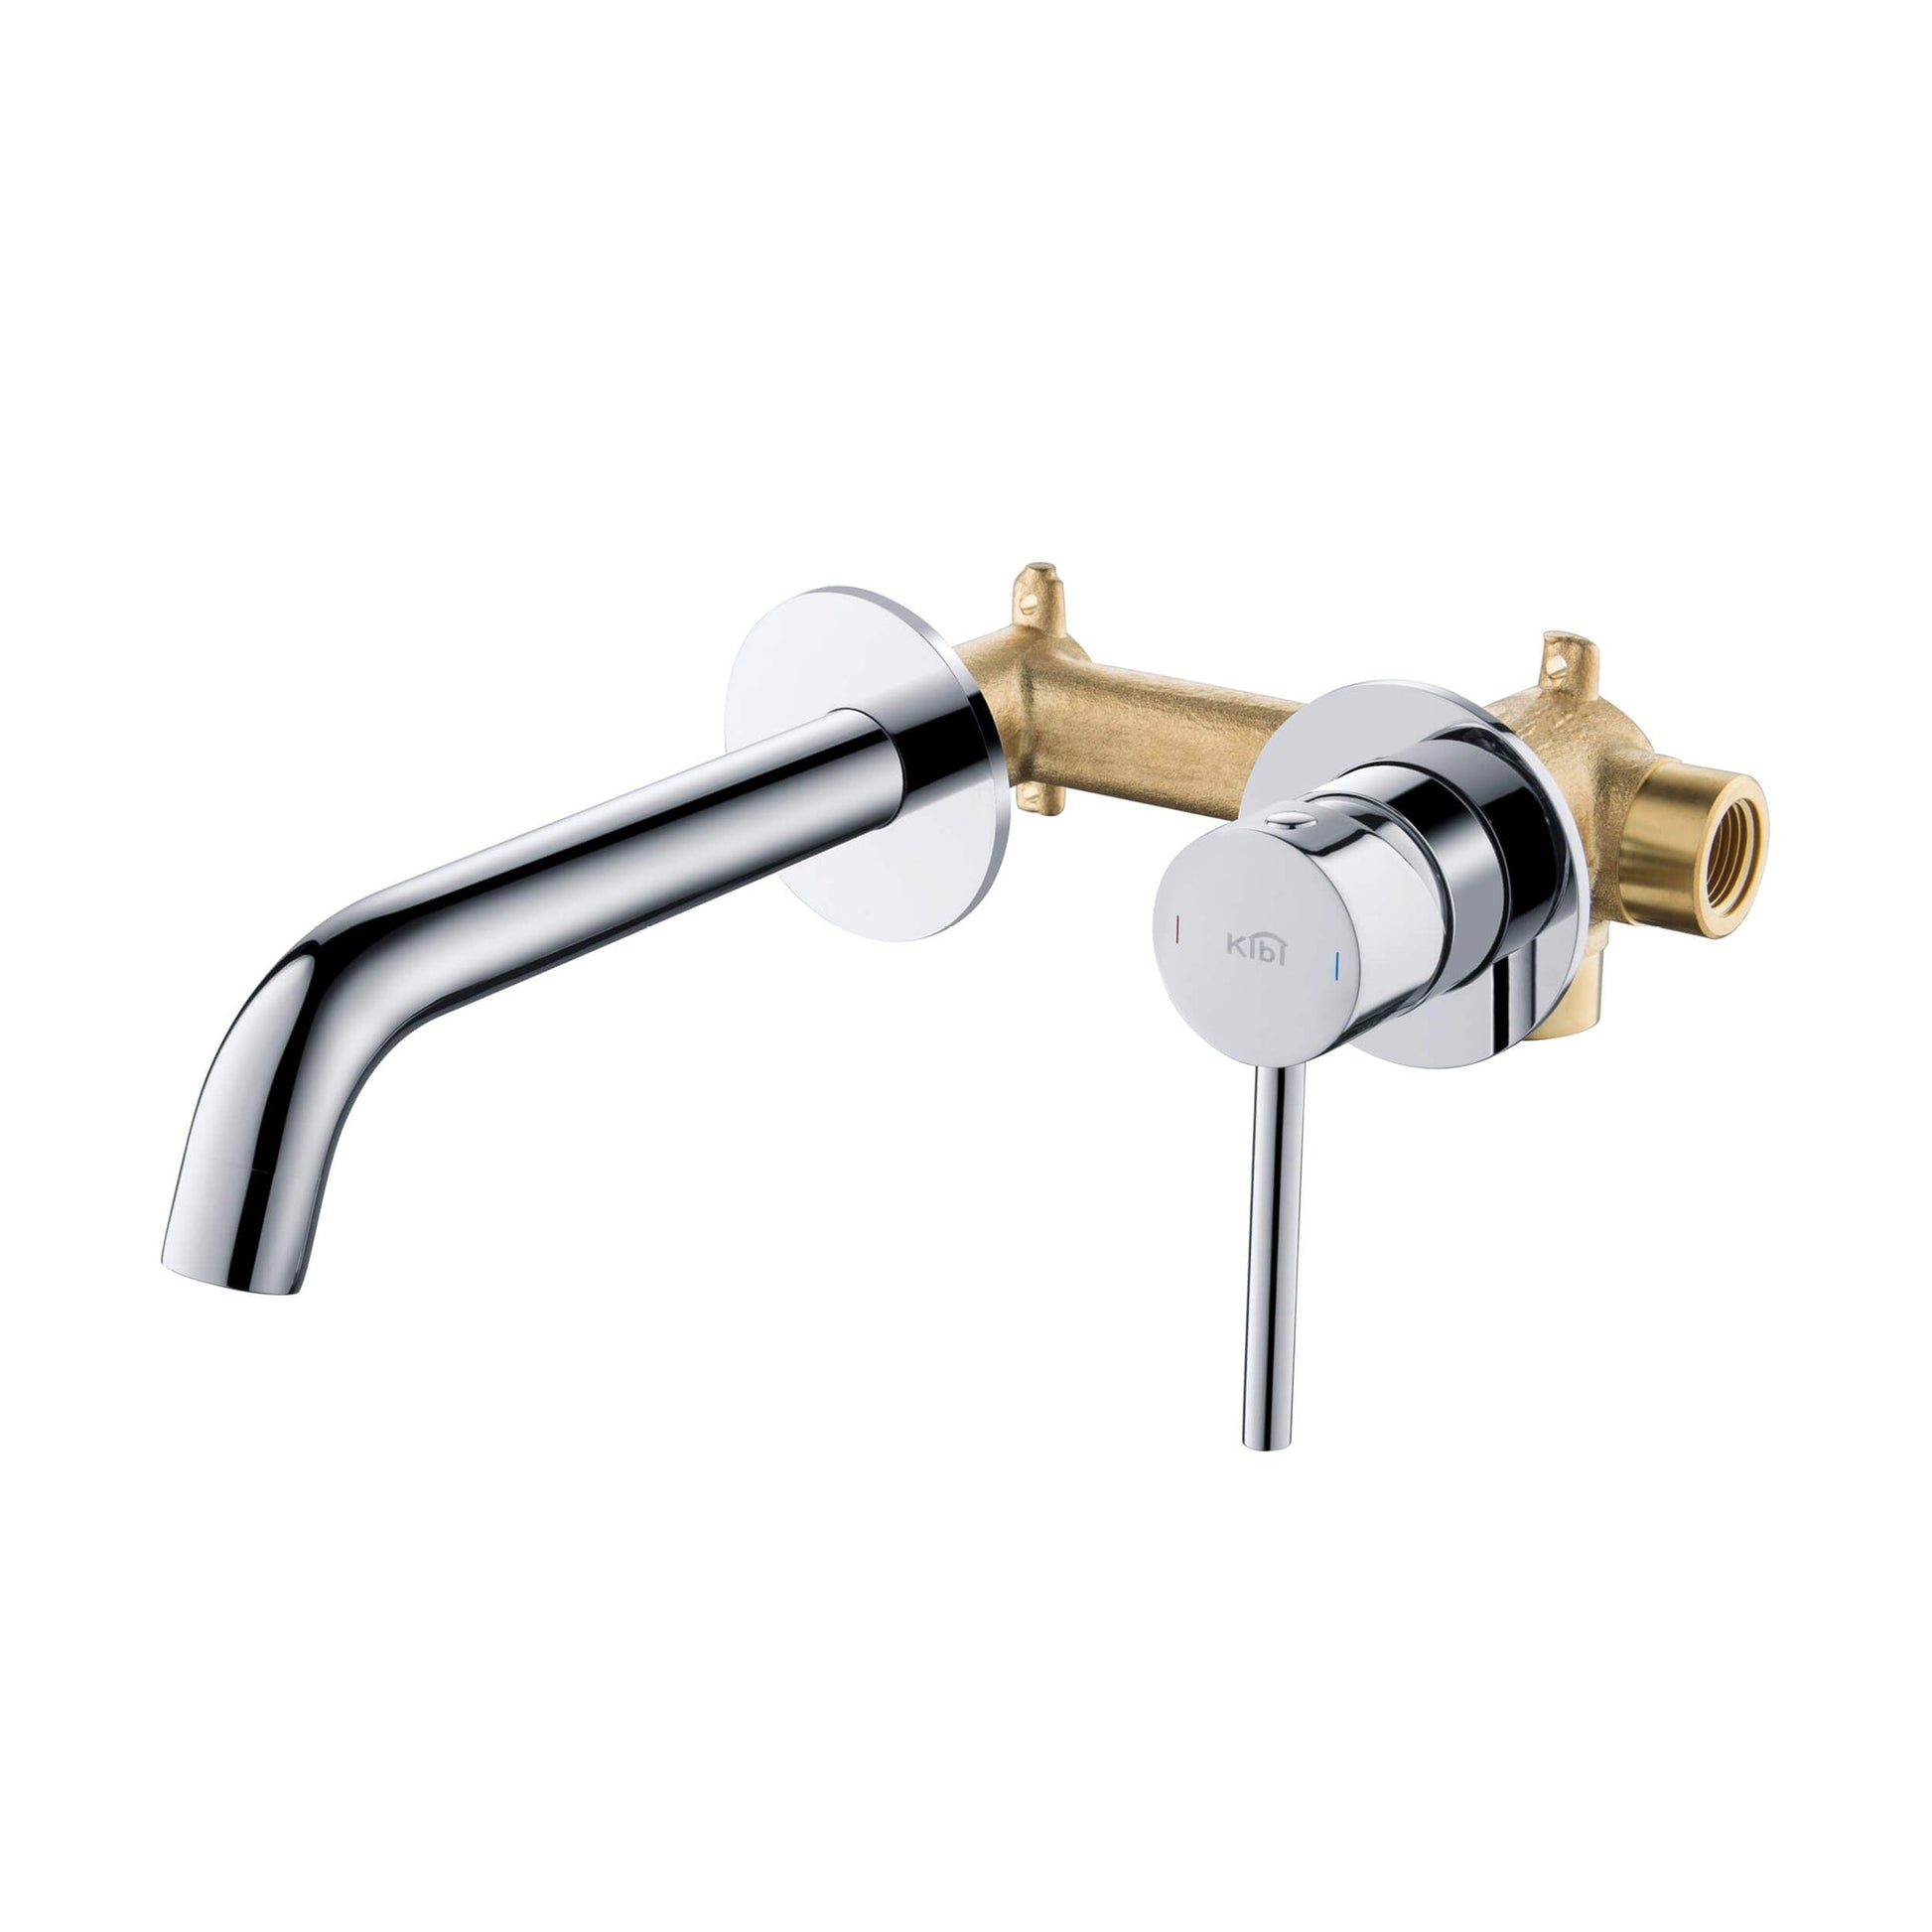 KIBI Circular Wall Mounted Single Handle Chrome Solid Brass Bathroom Sink Faucet